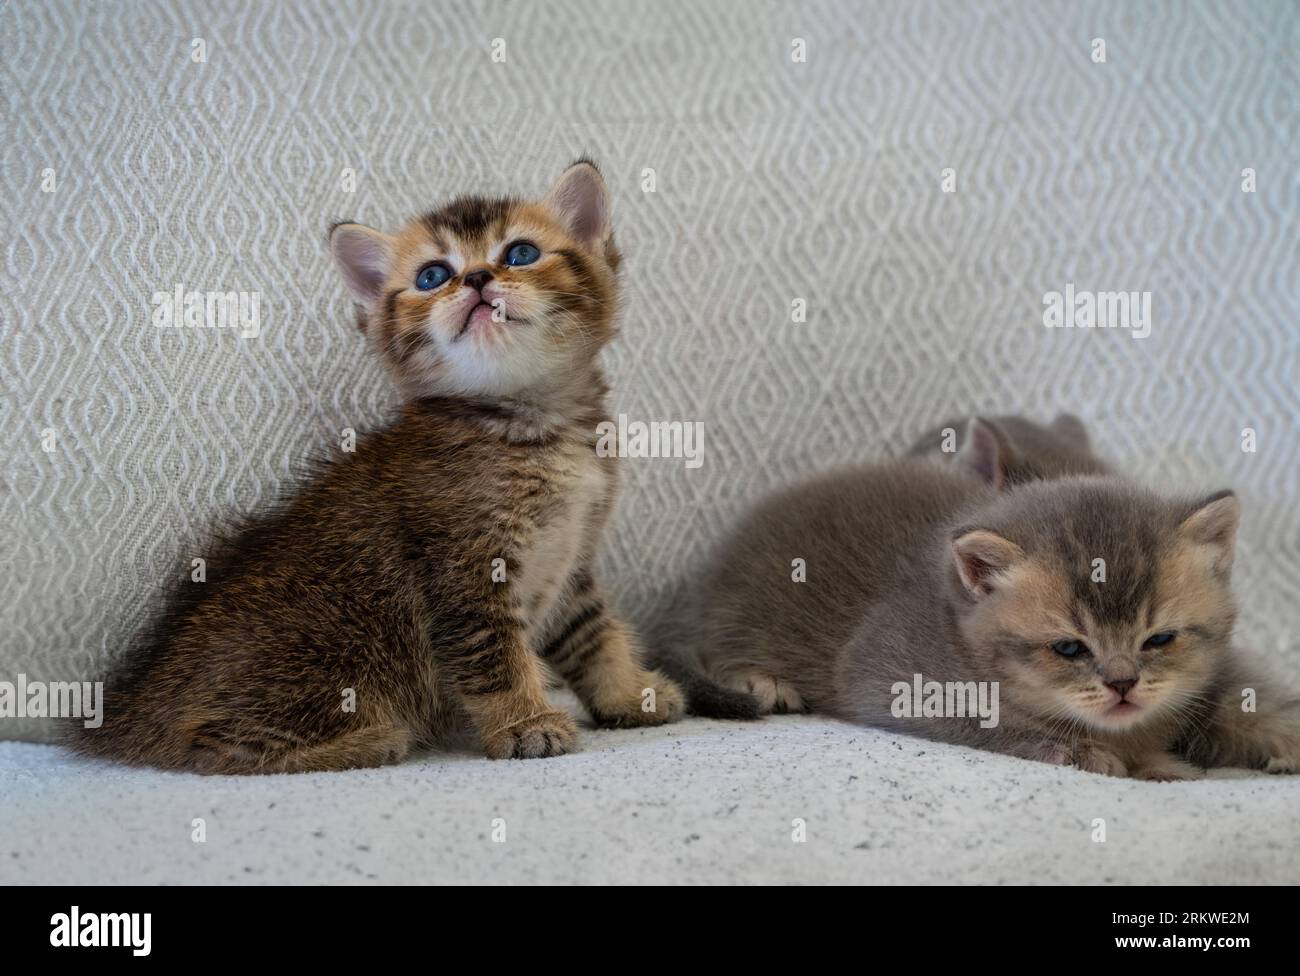 A newborn stray cat kitten in the nest. Stock Photo